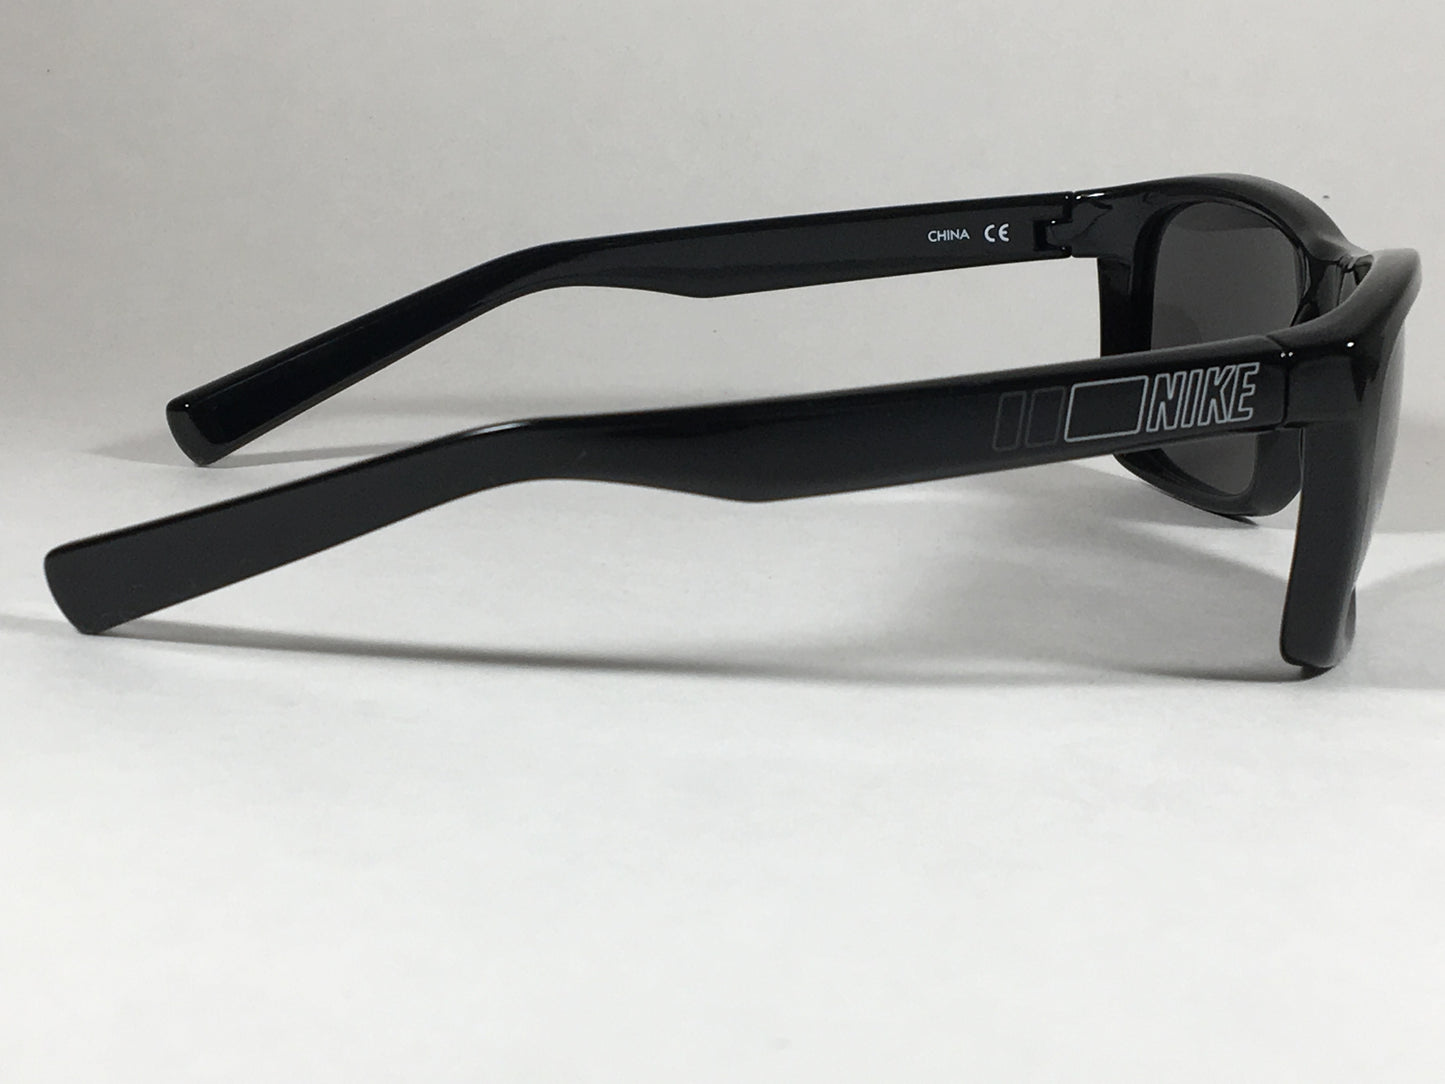 Nike Vintage 73 Square Sunglasses Ev0598 002 410 Black Gloss Frame Gray Lens - Sunglasses